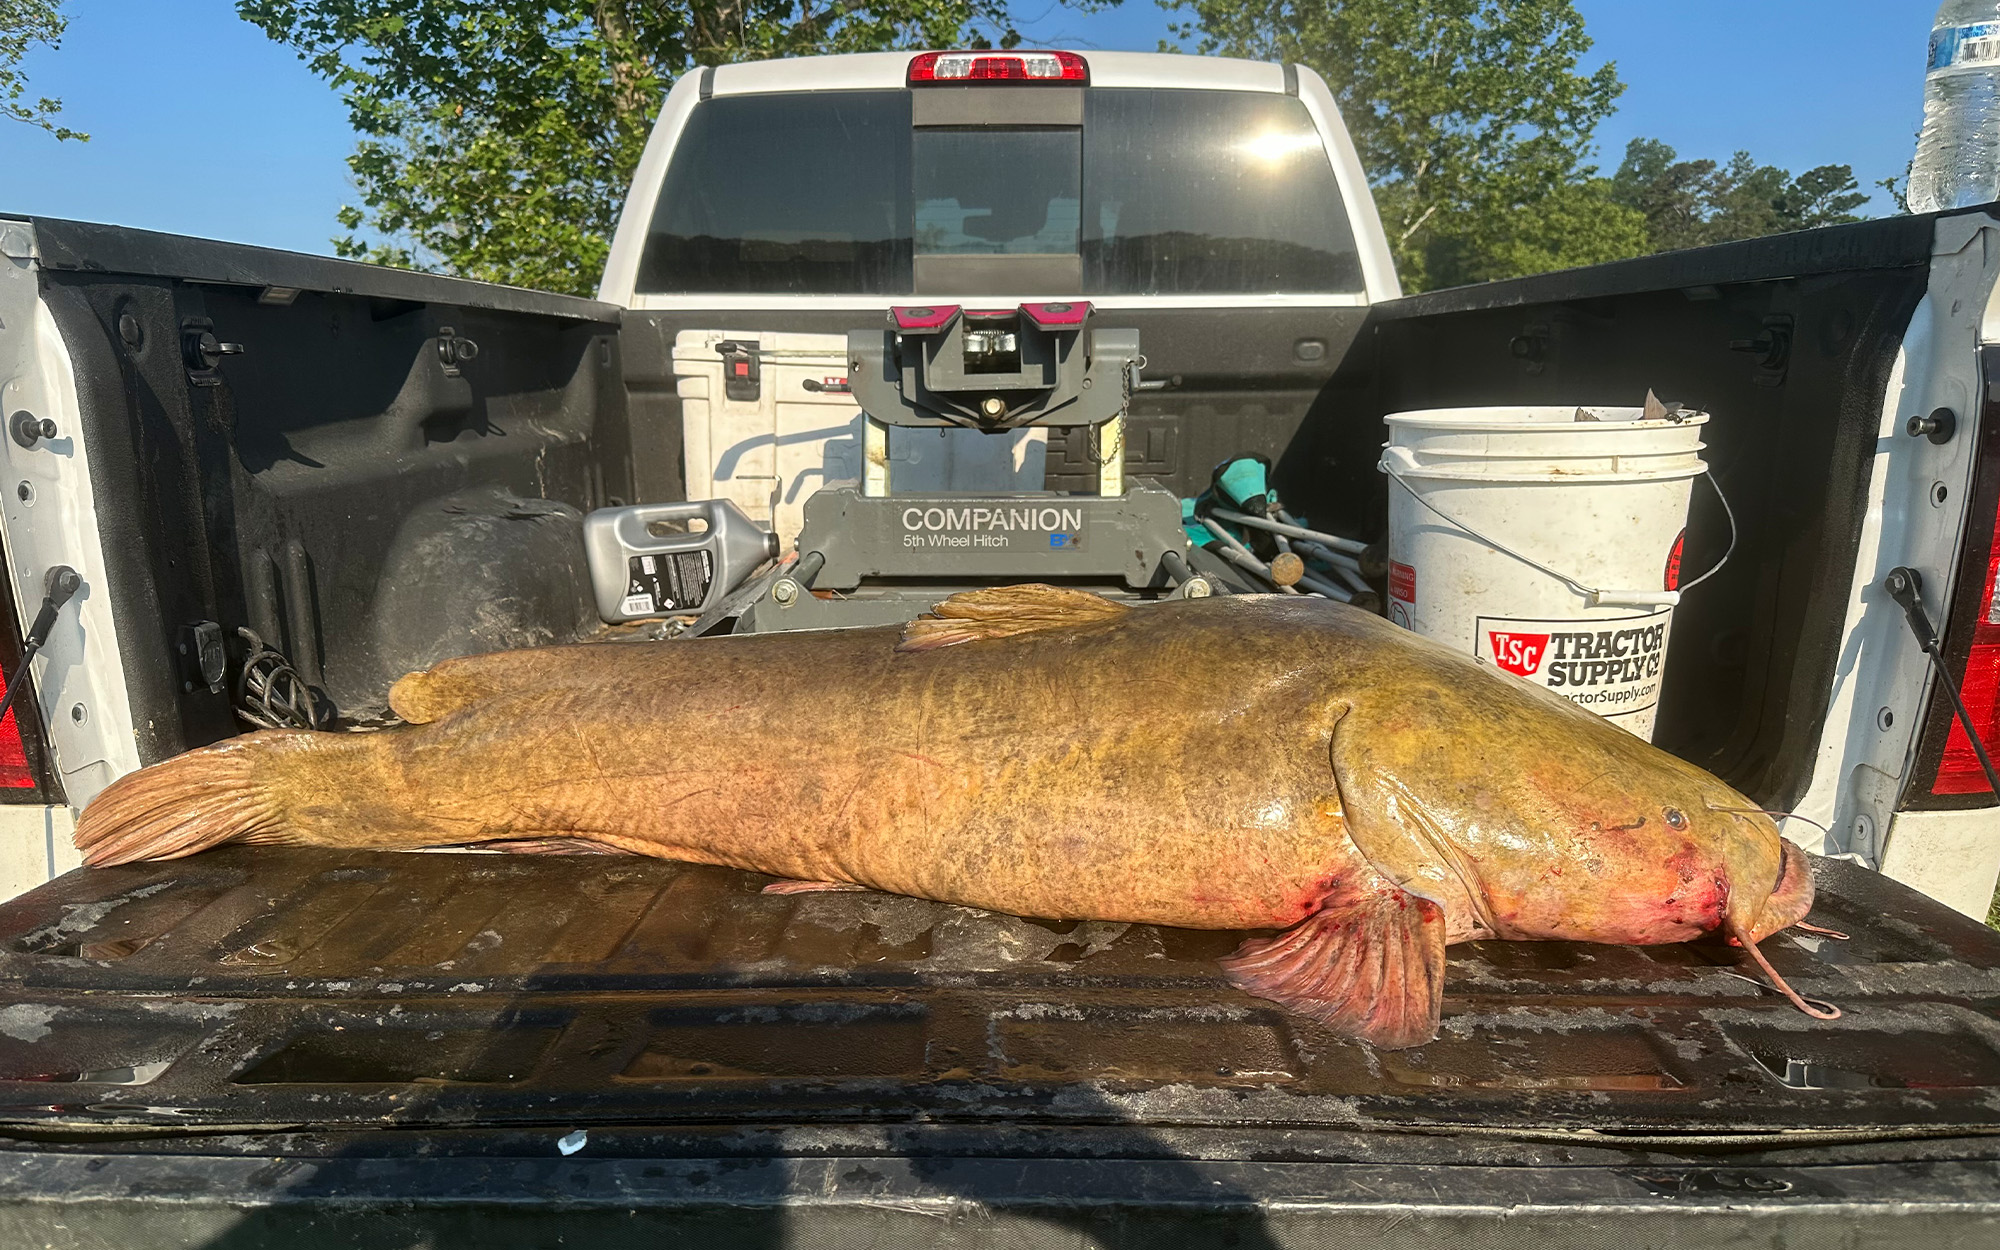 A massive flathead catfish in a truck bed.